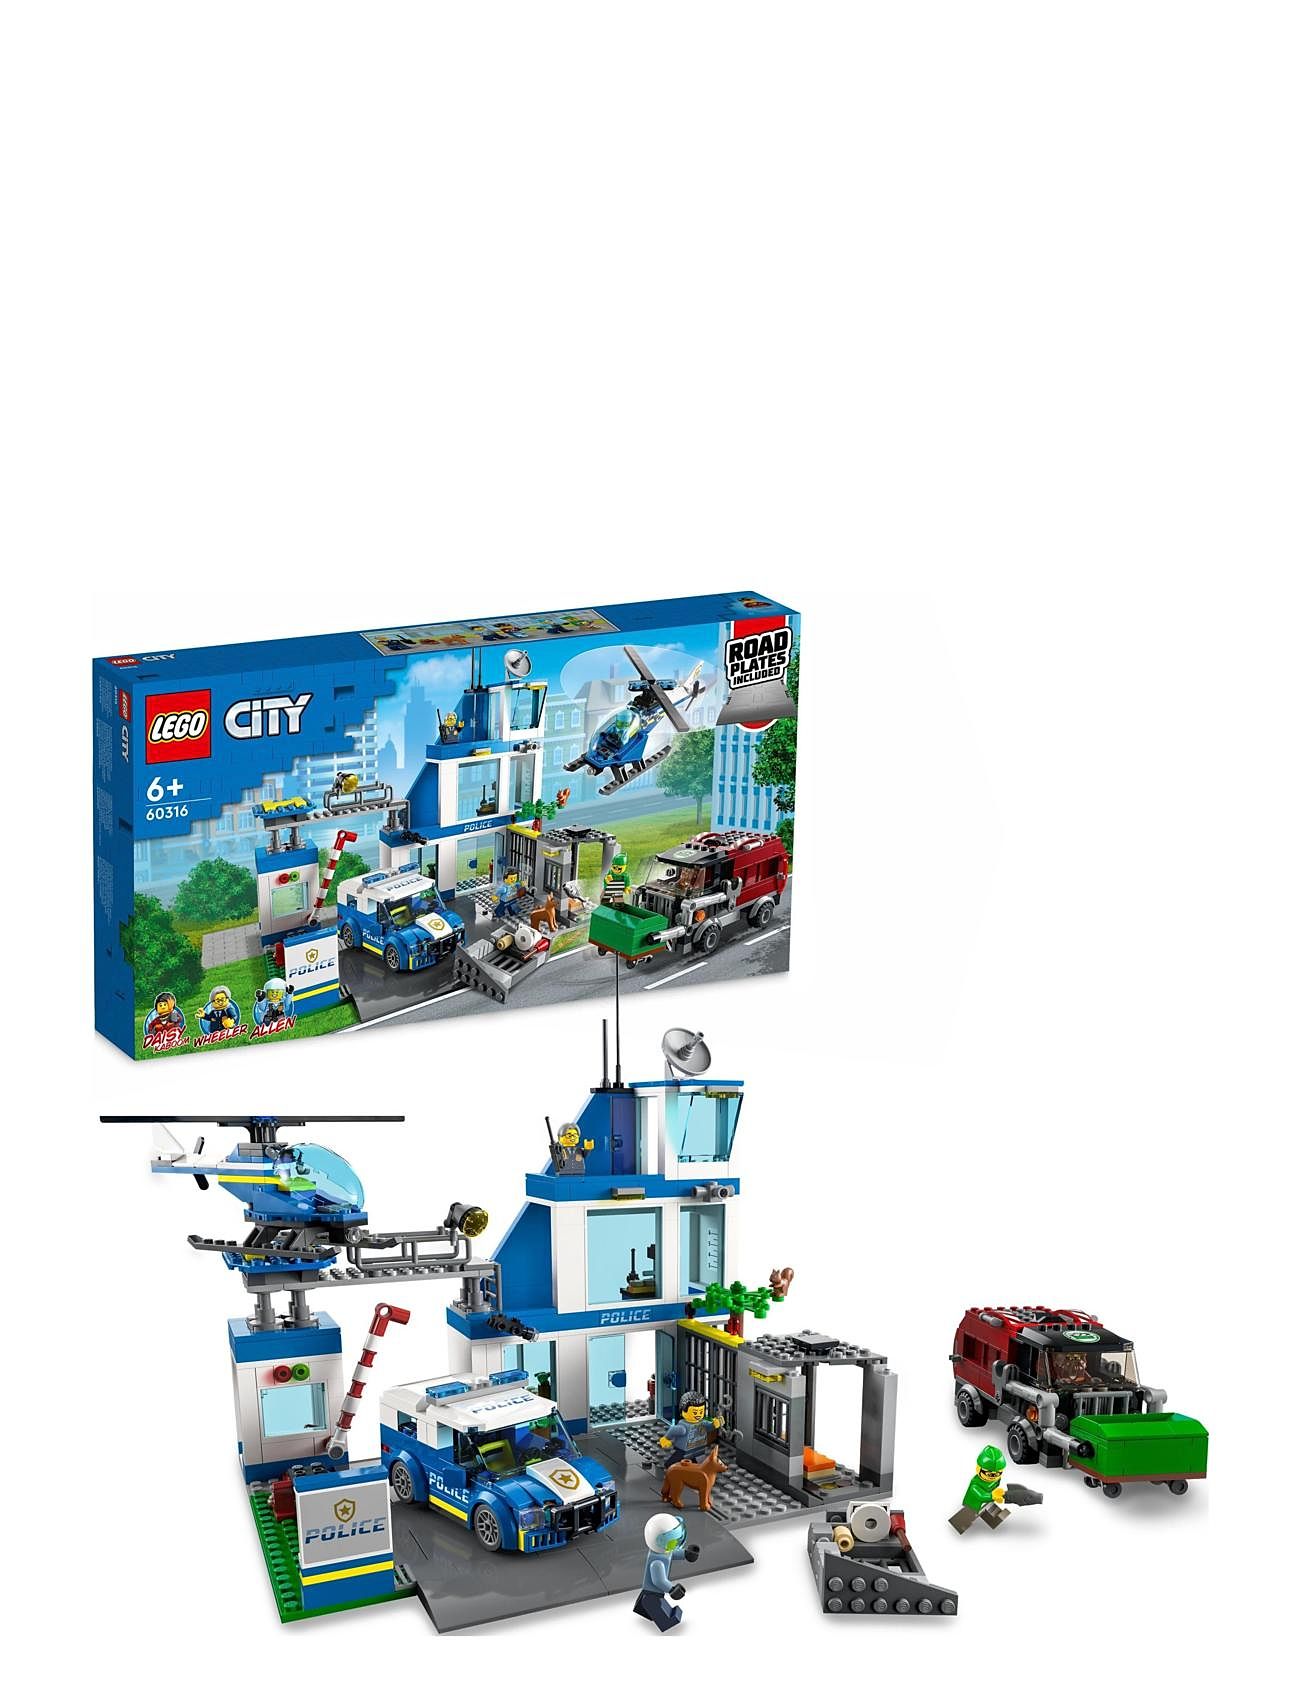 Police Station Truck Toy & Helicopter Set Toys Lego Toys Lego city Blue LEGO